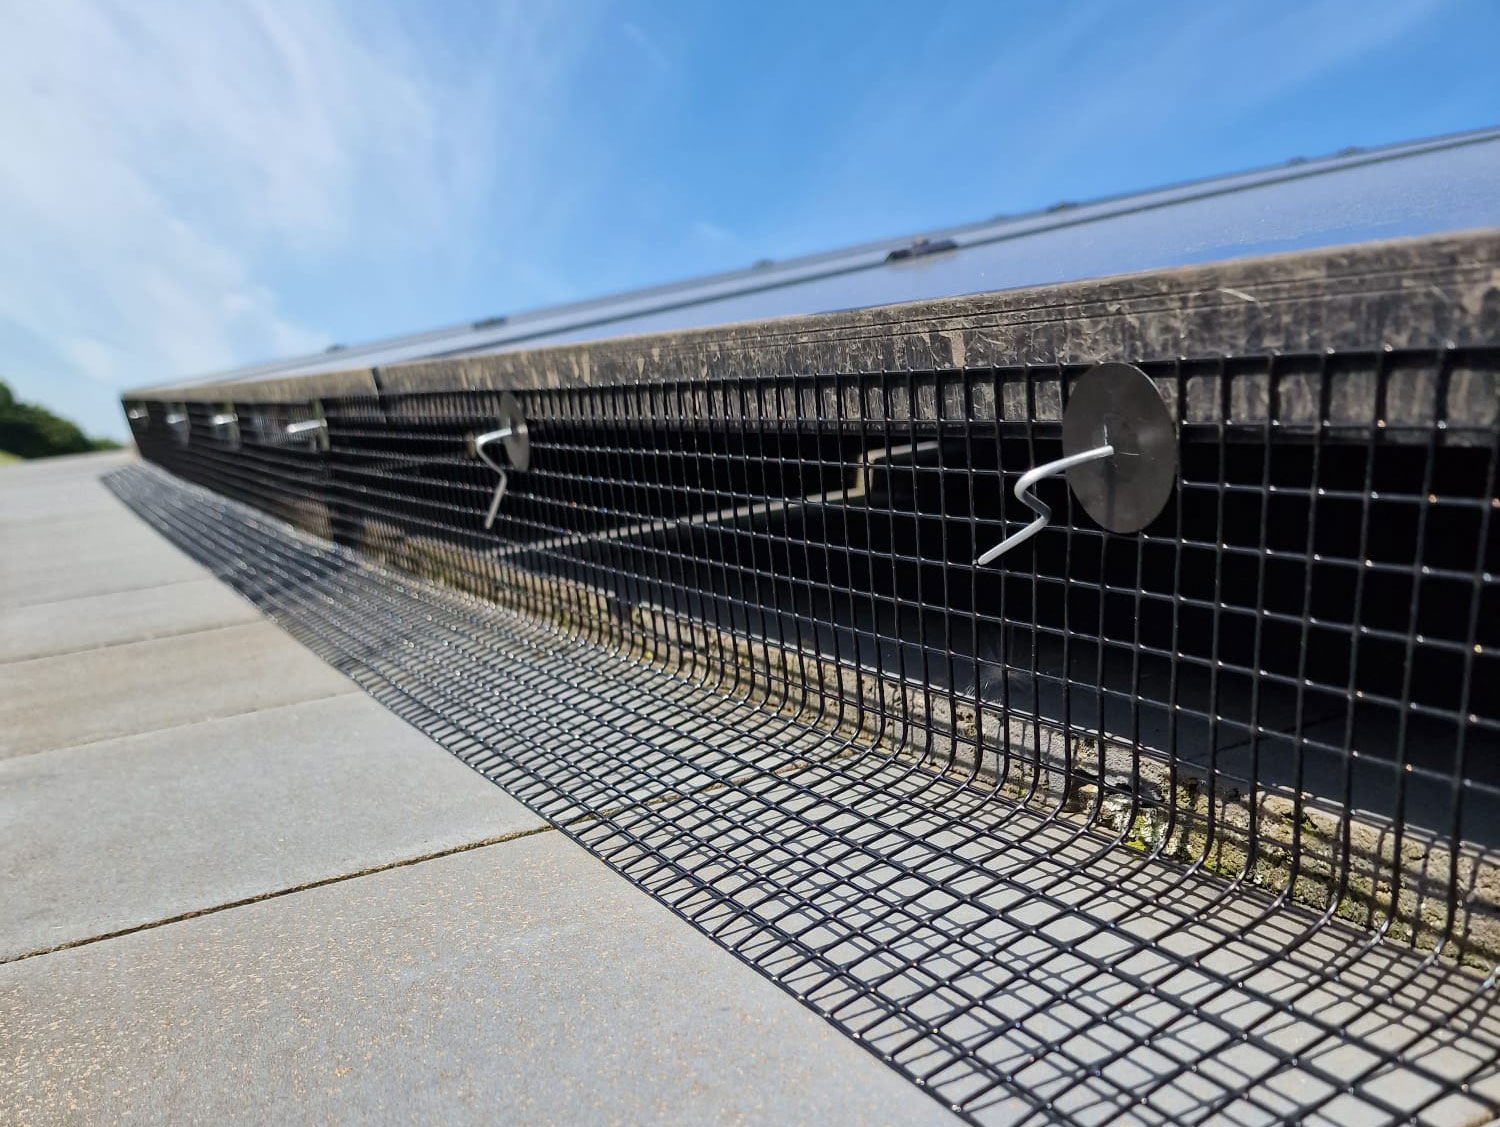 New Build Solar Panels Attract Pigeons in Burton Joyce